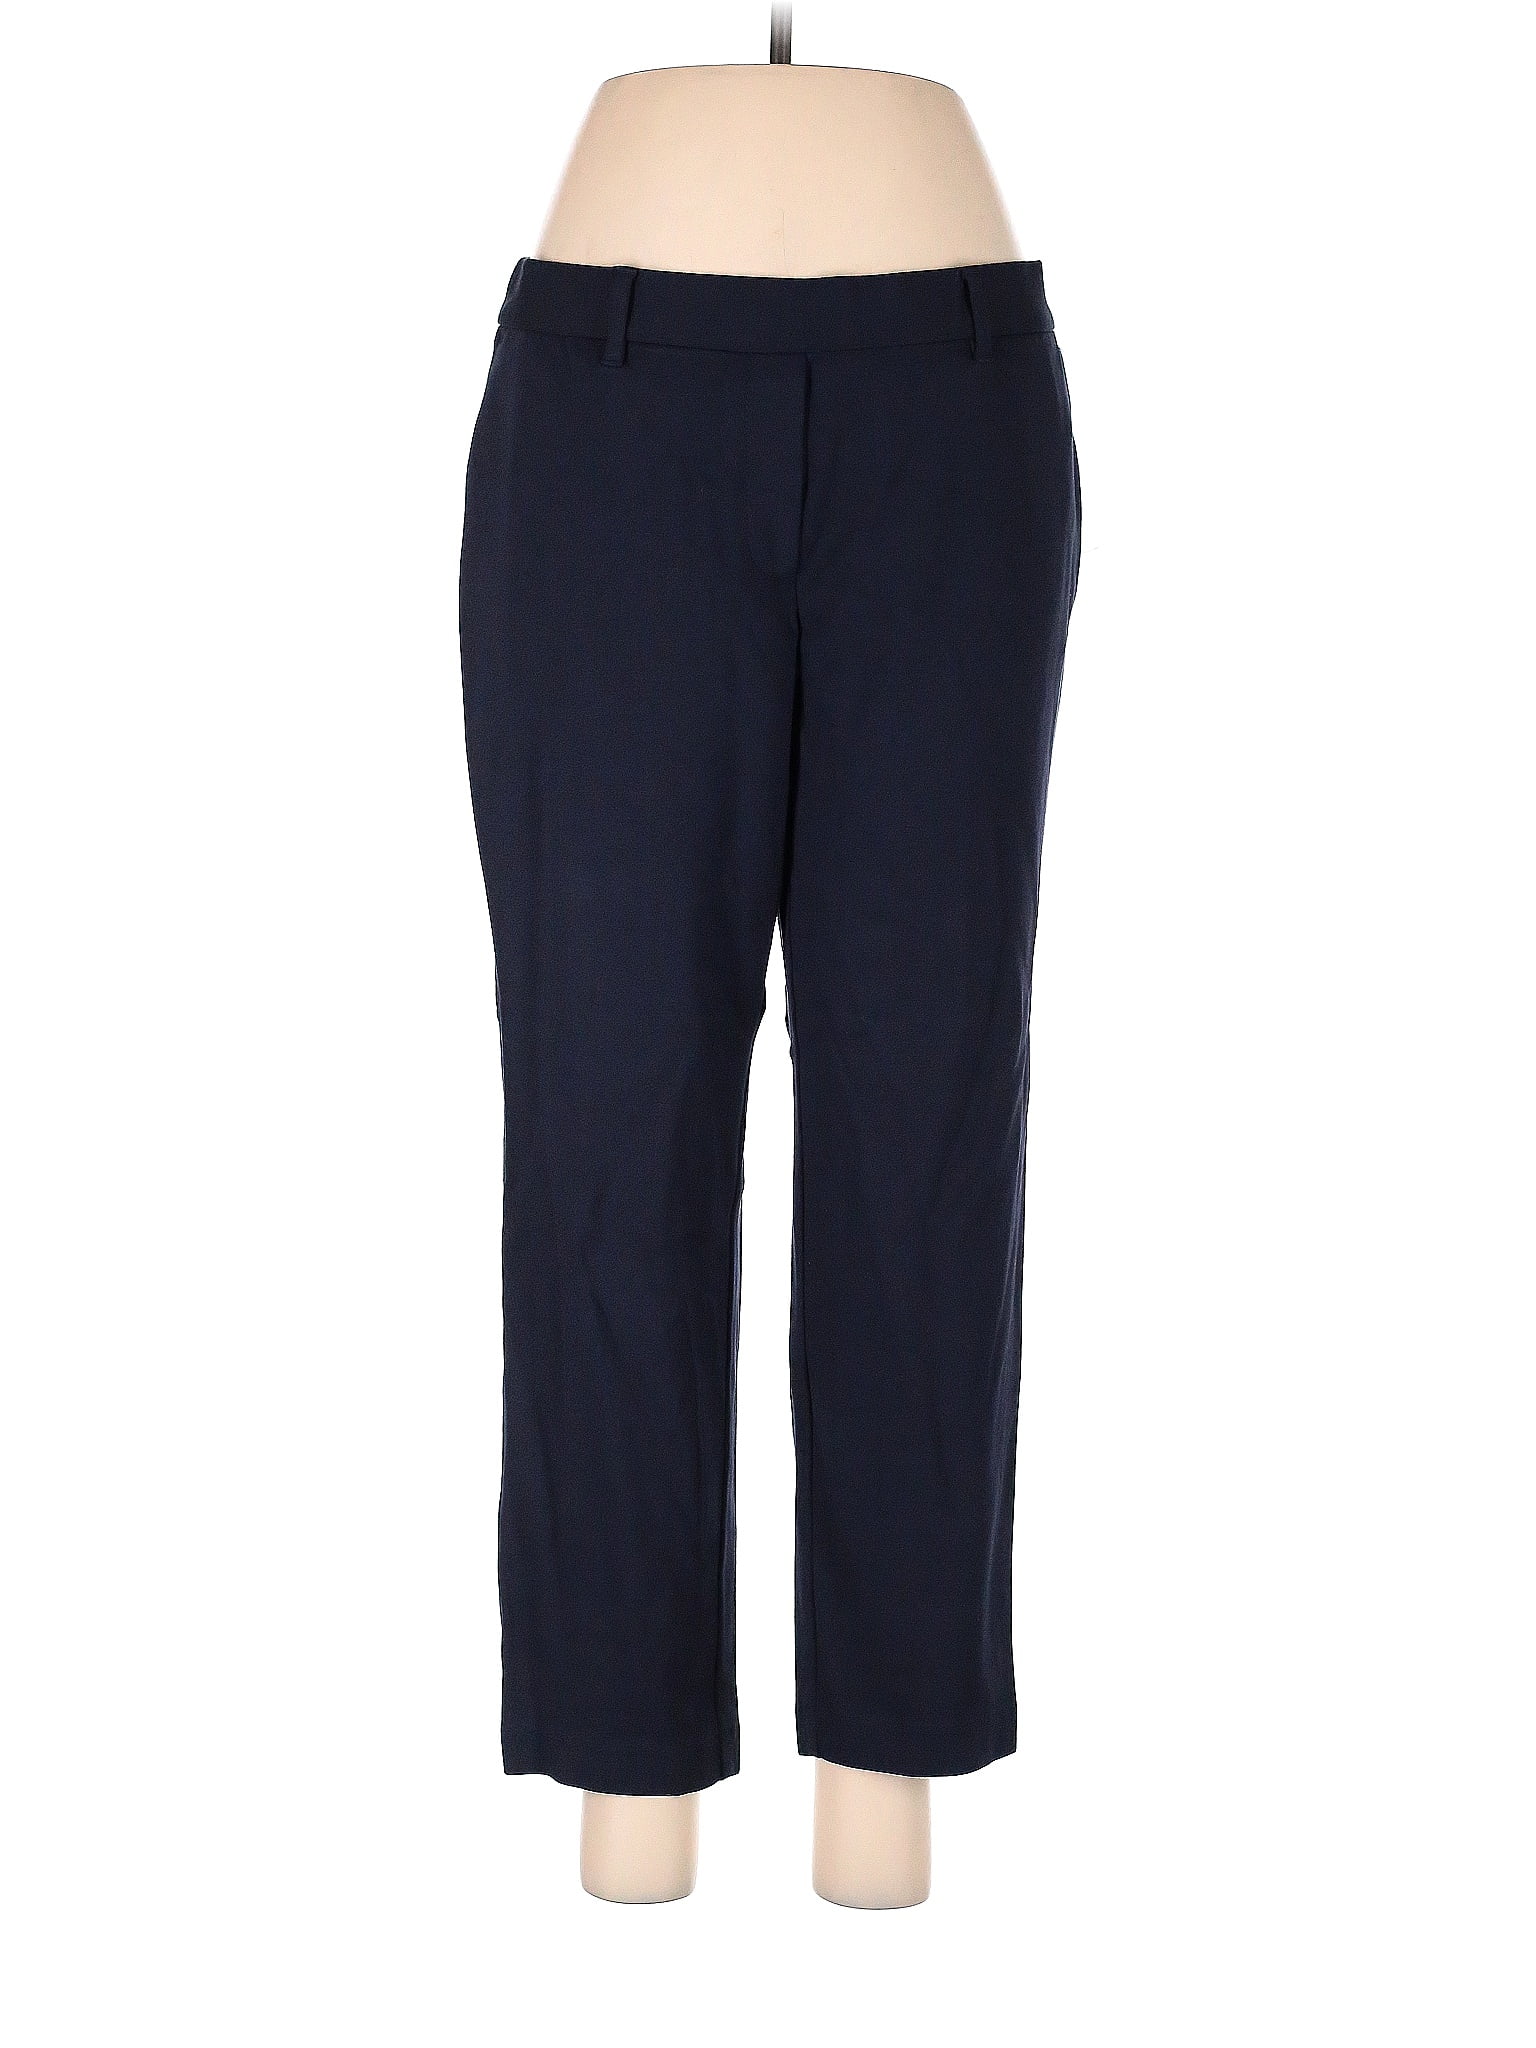 J.Jill Navy Blue Dress Pants Size M (Petite) - 74% off | thredUP